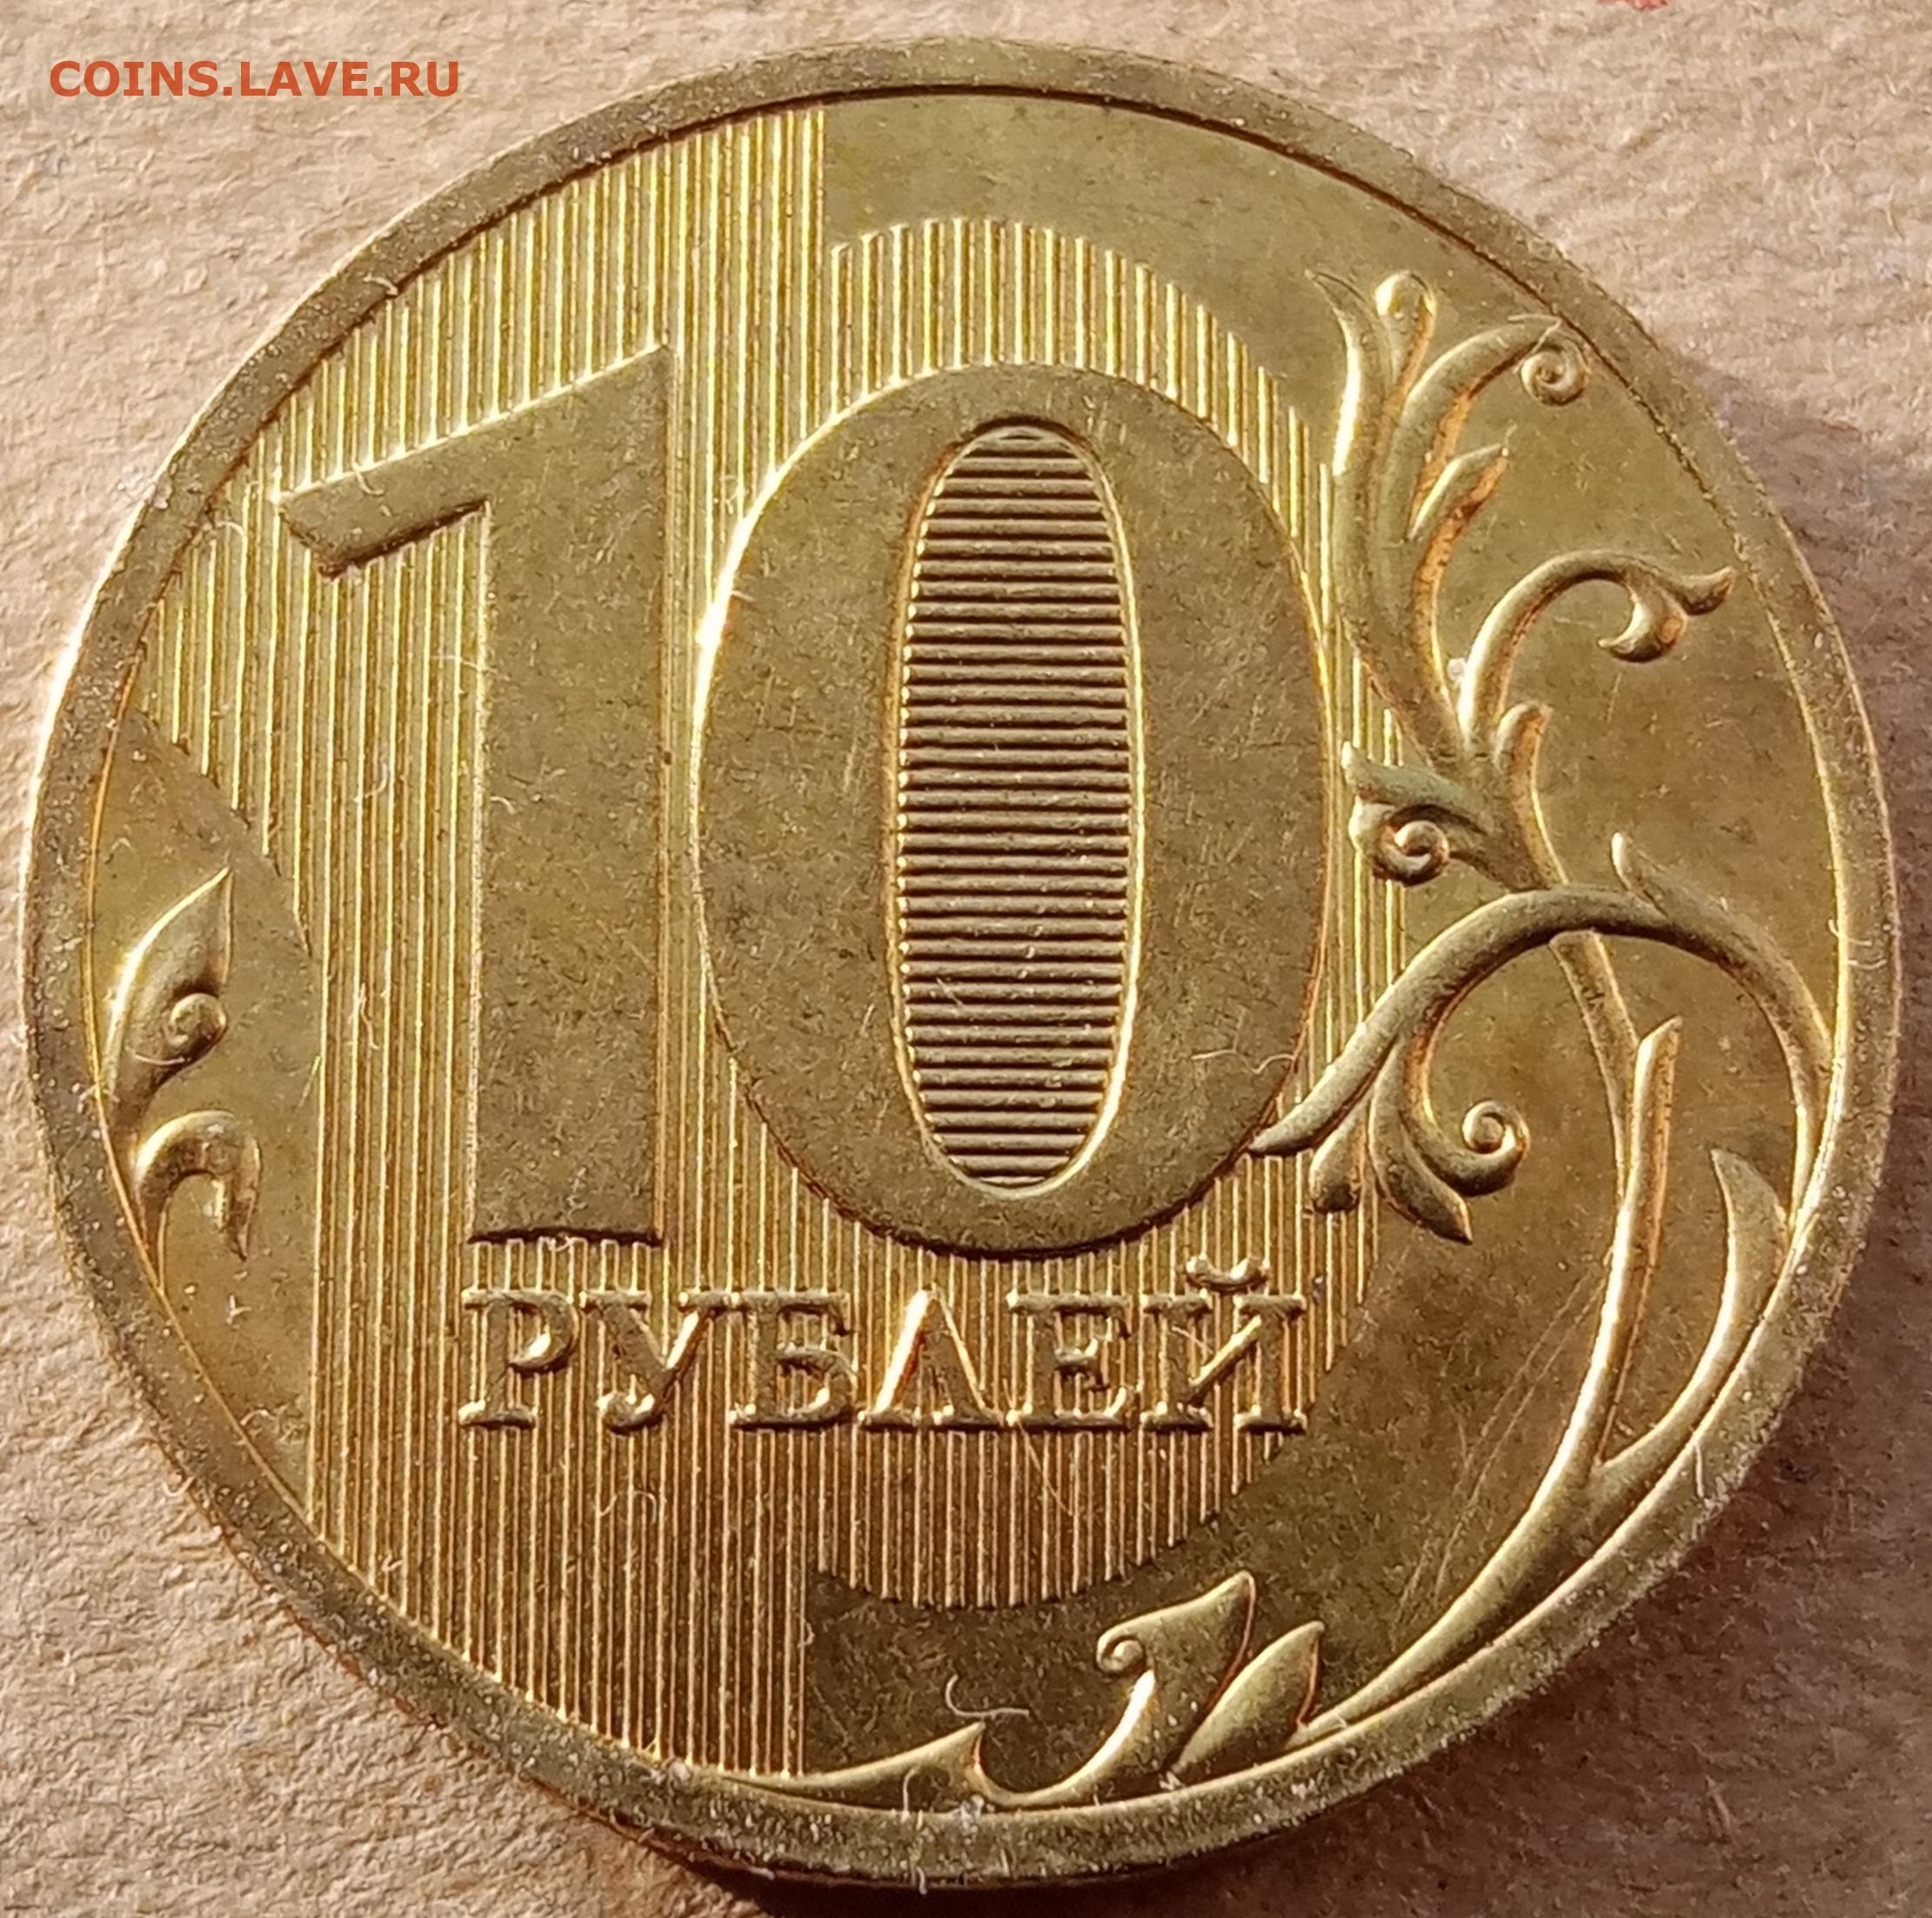 Steam рубли по 10 рублей фото 57